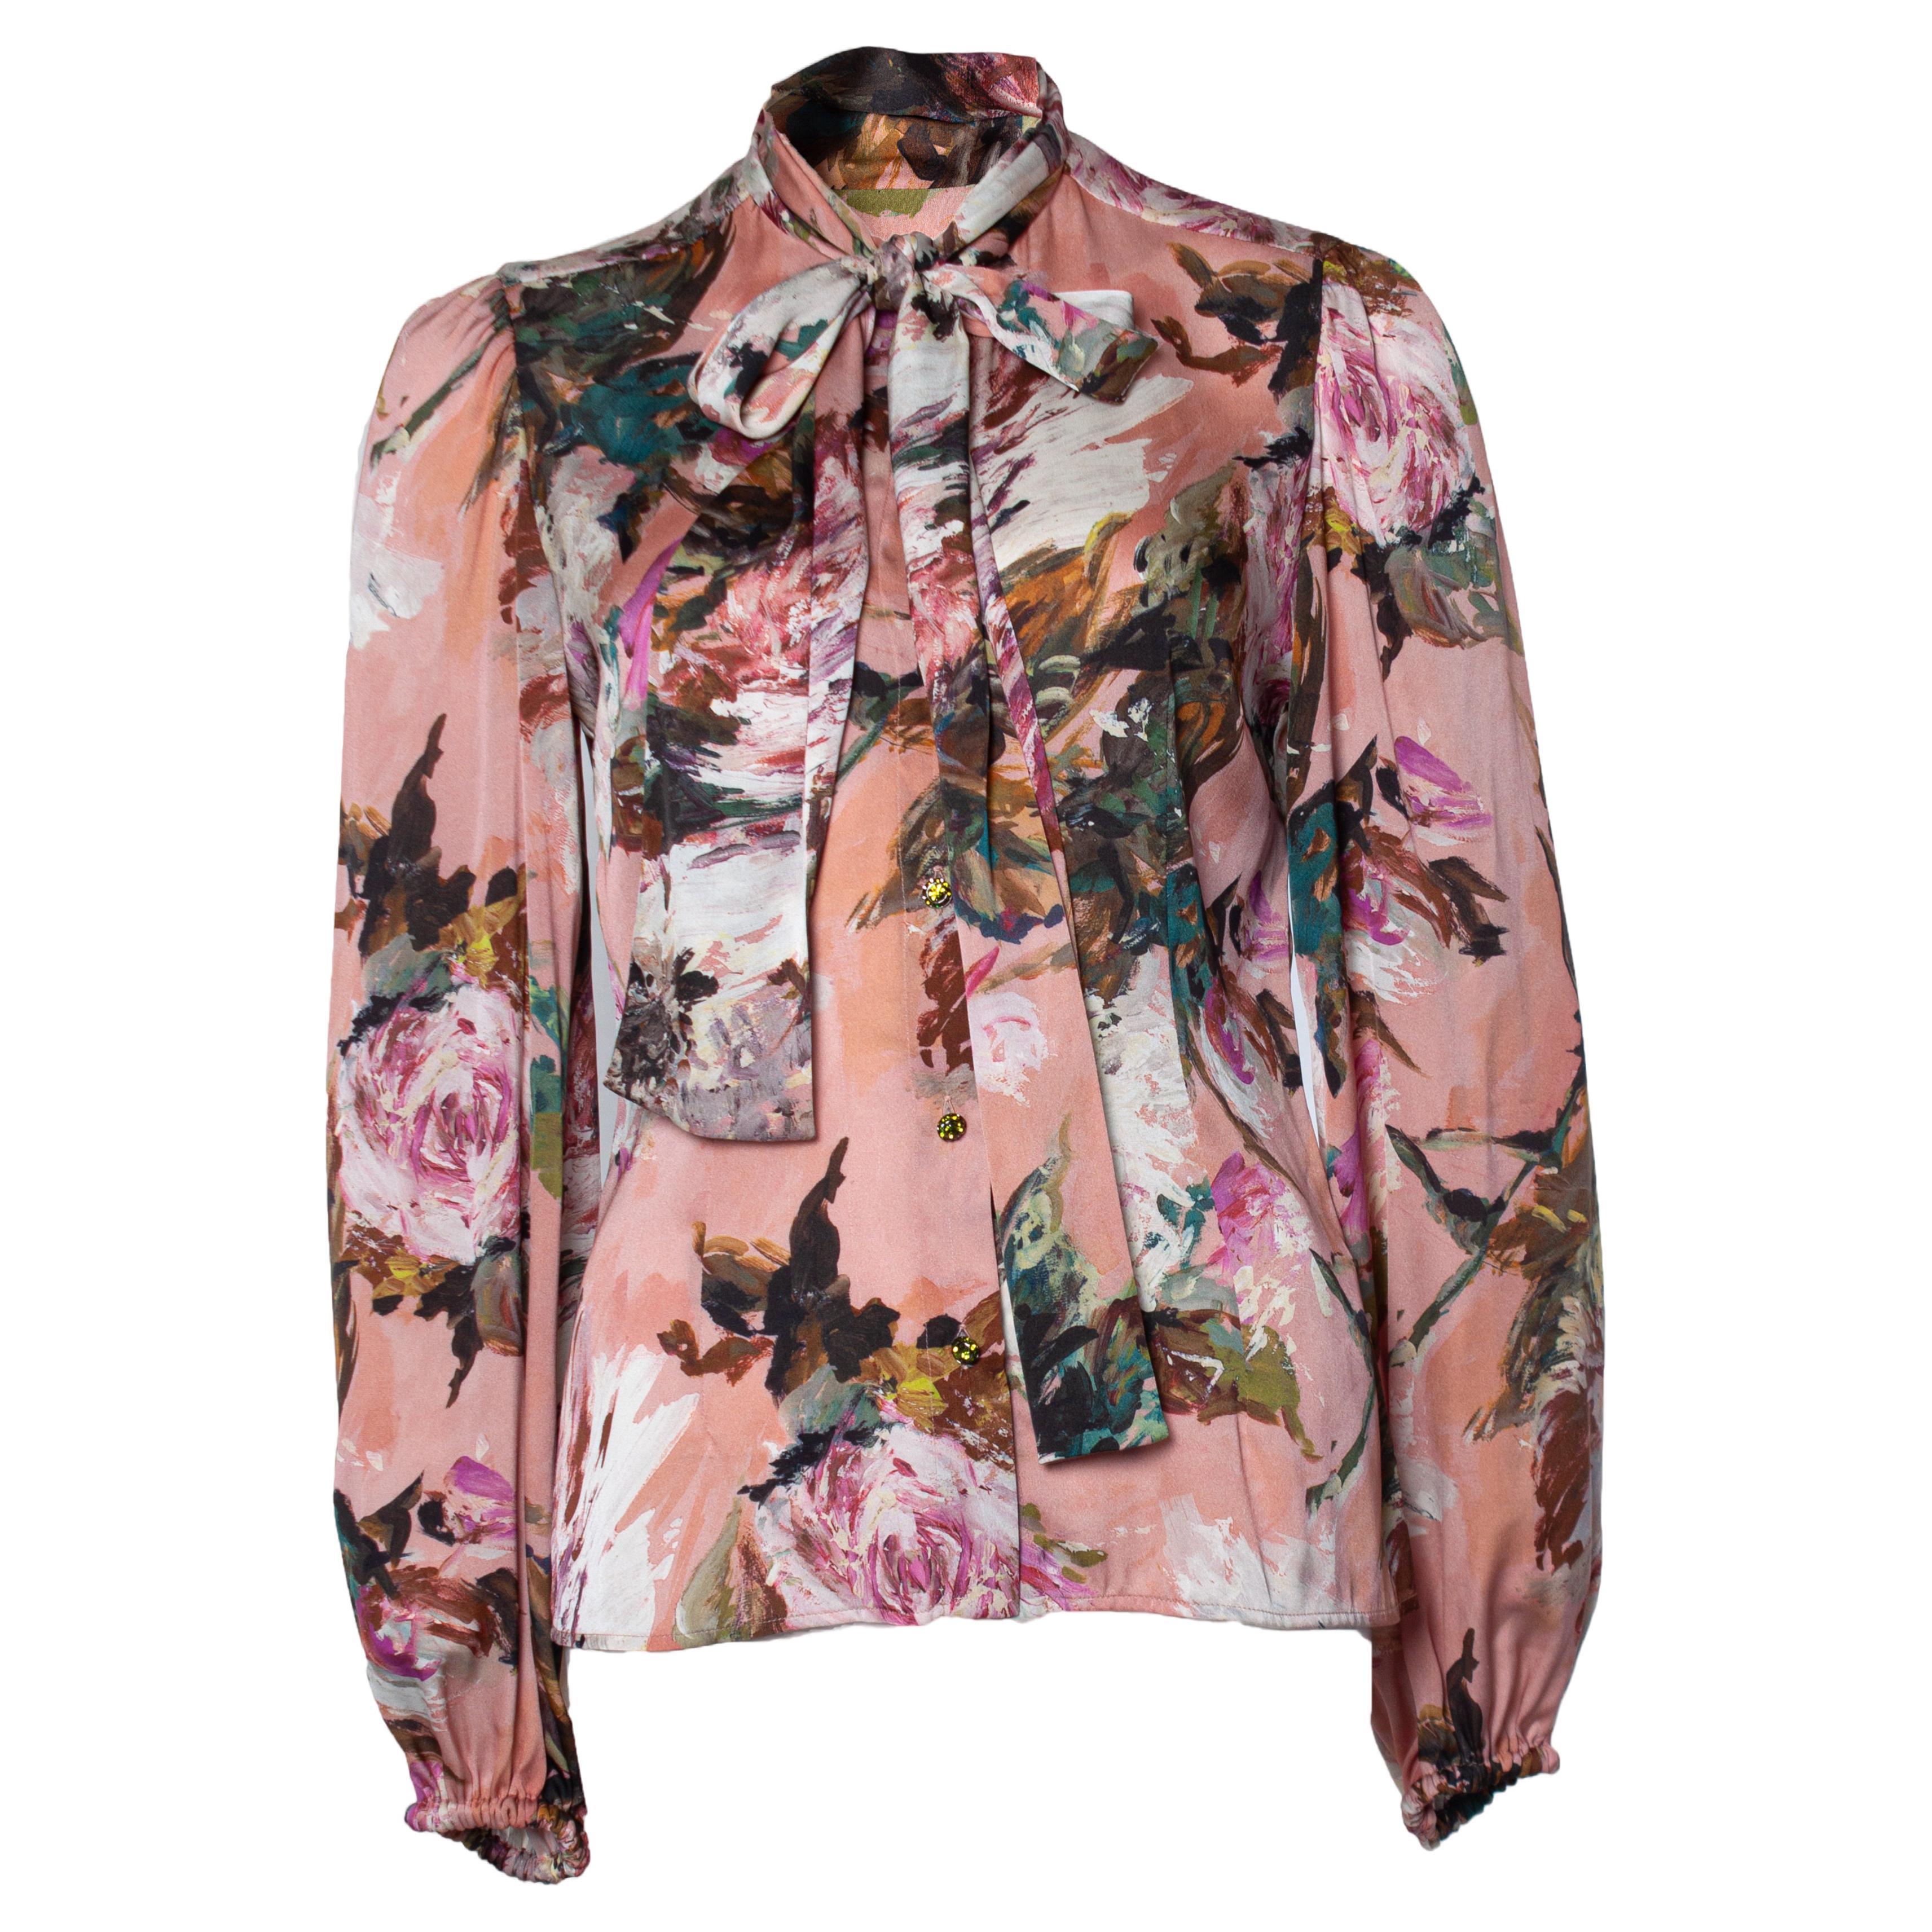 Dolce & Gabbana, Floral blouse